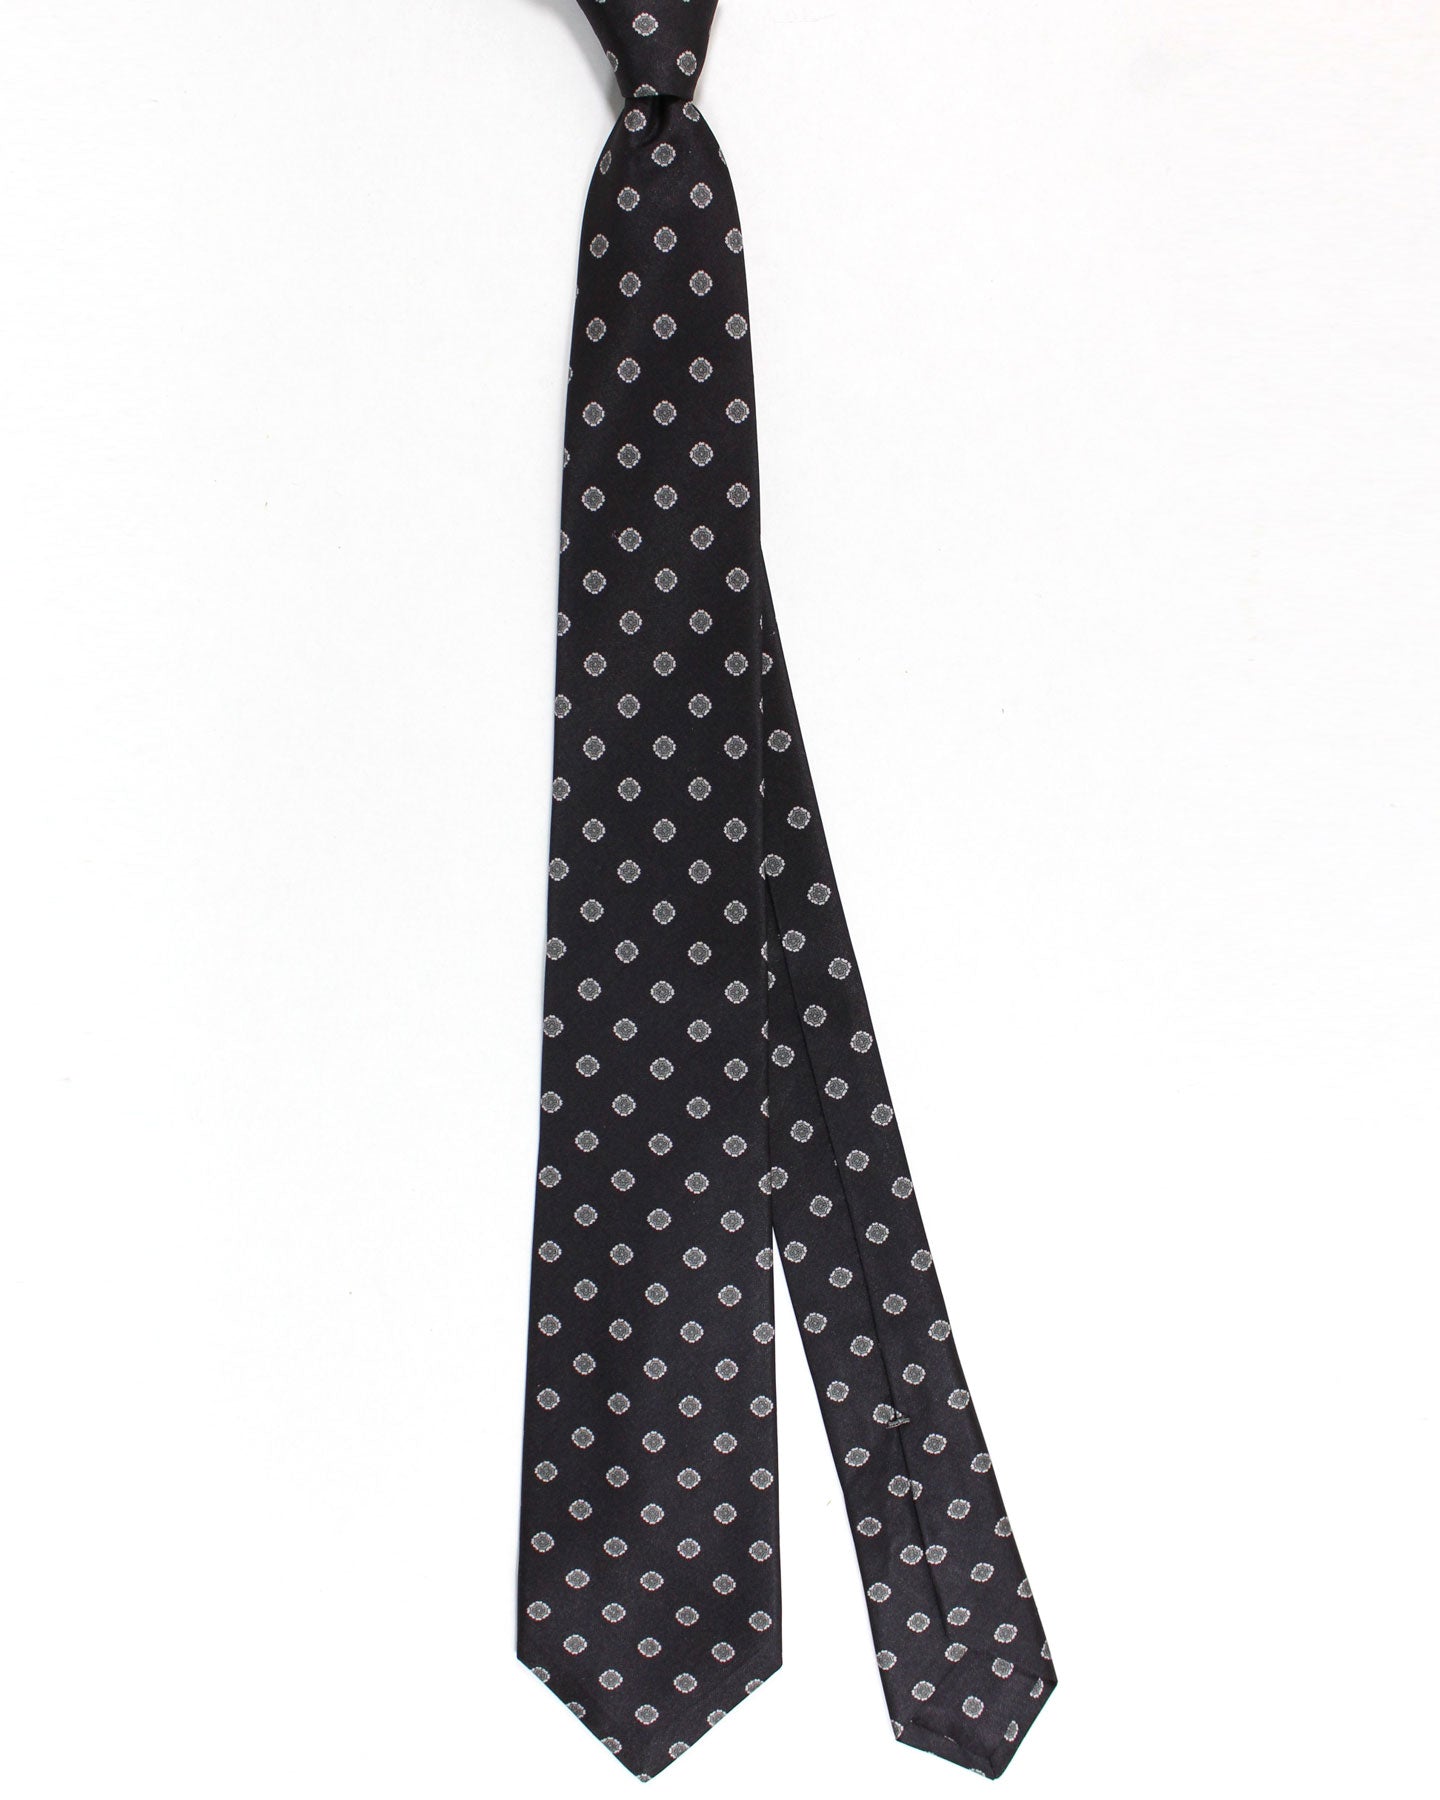 Sartorio Sevenfold Tie Black Gray Medallions Design